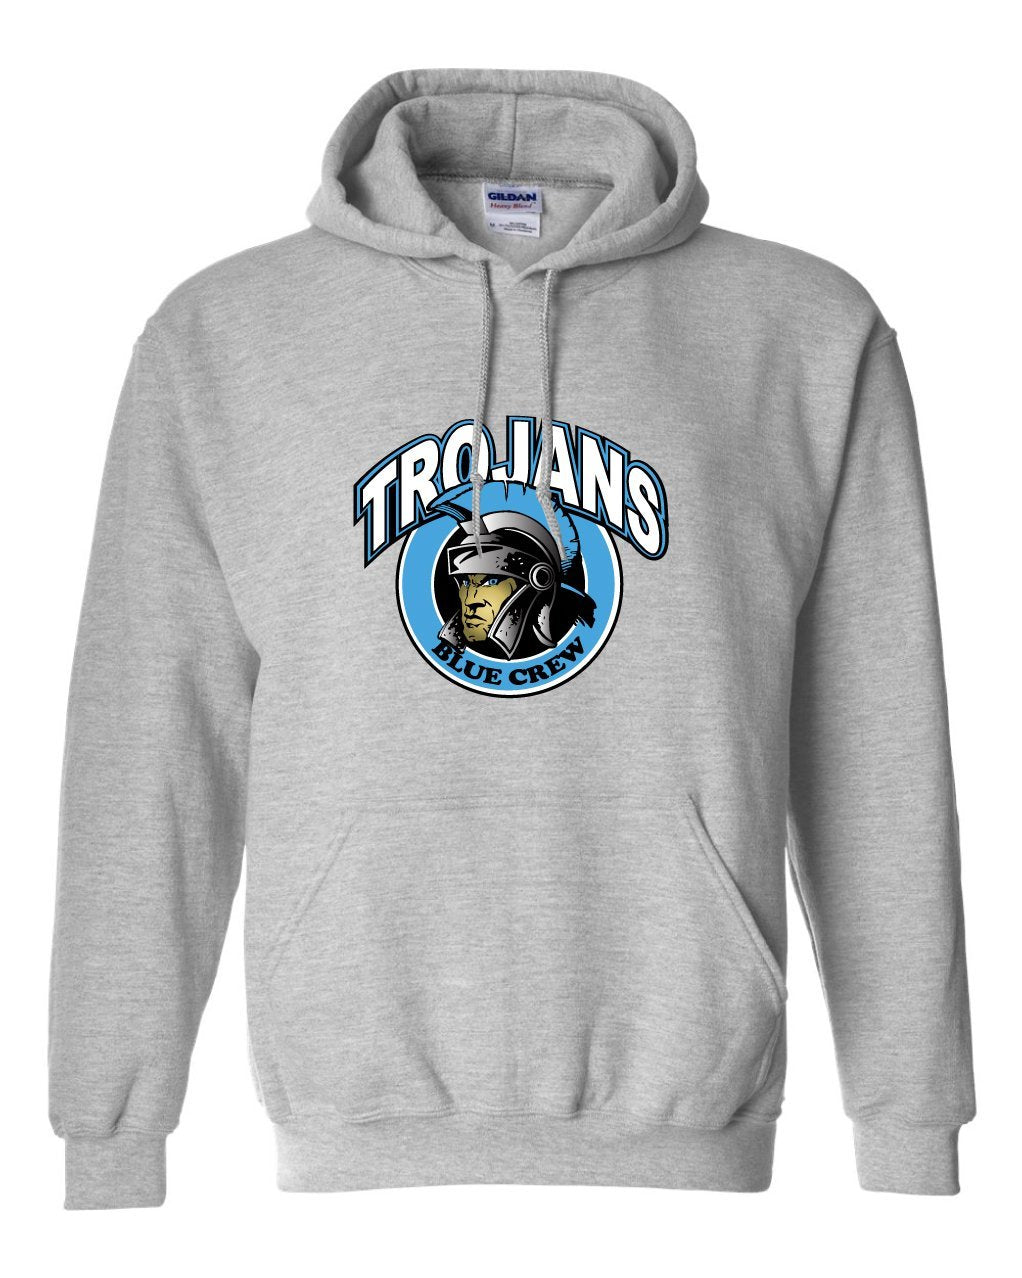 Triopia Trojans - Blue Crew Hooded Sweatshirt